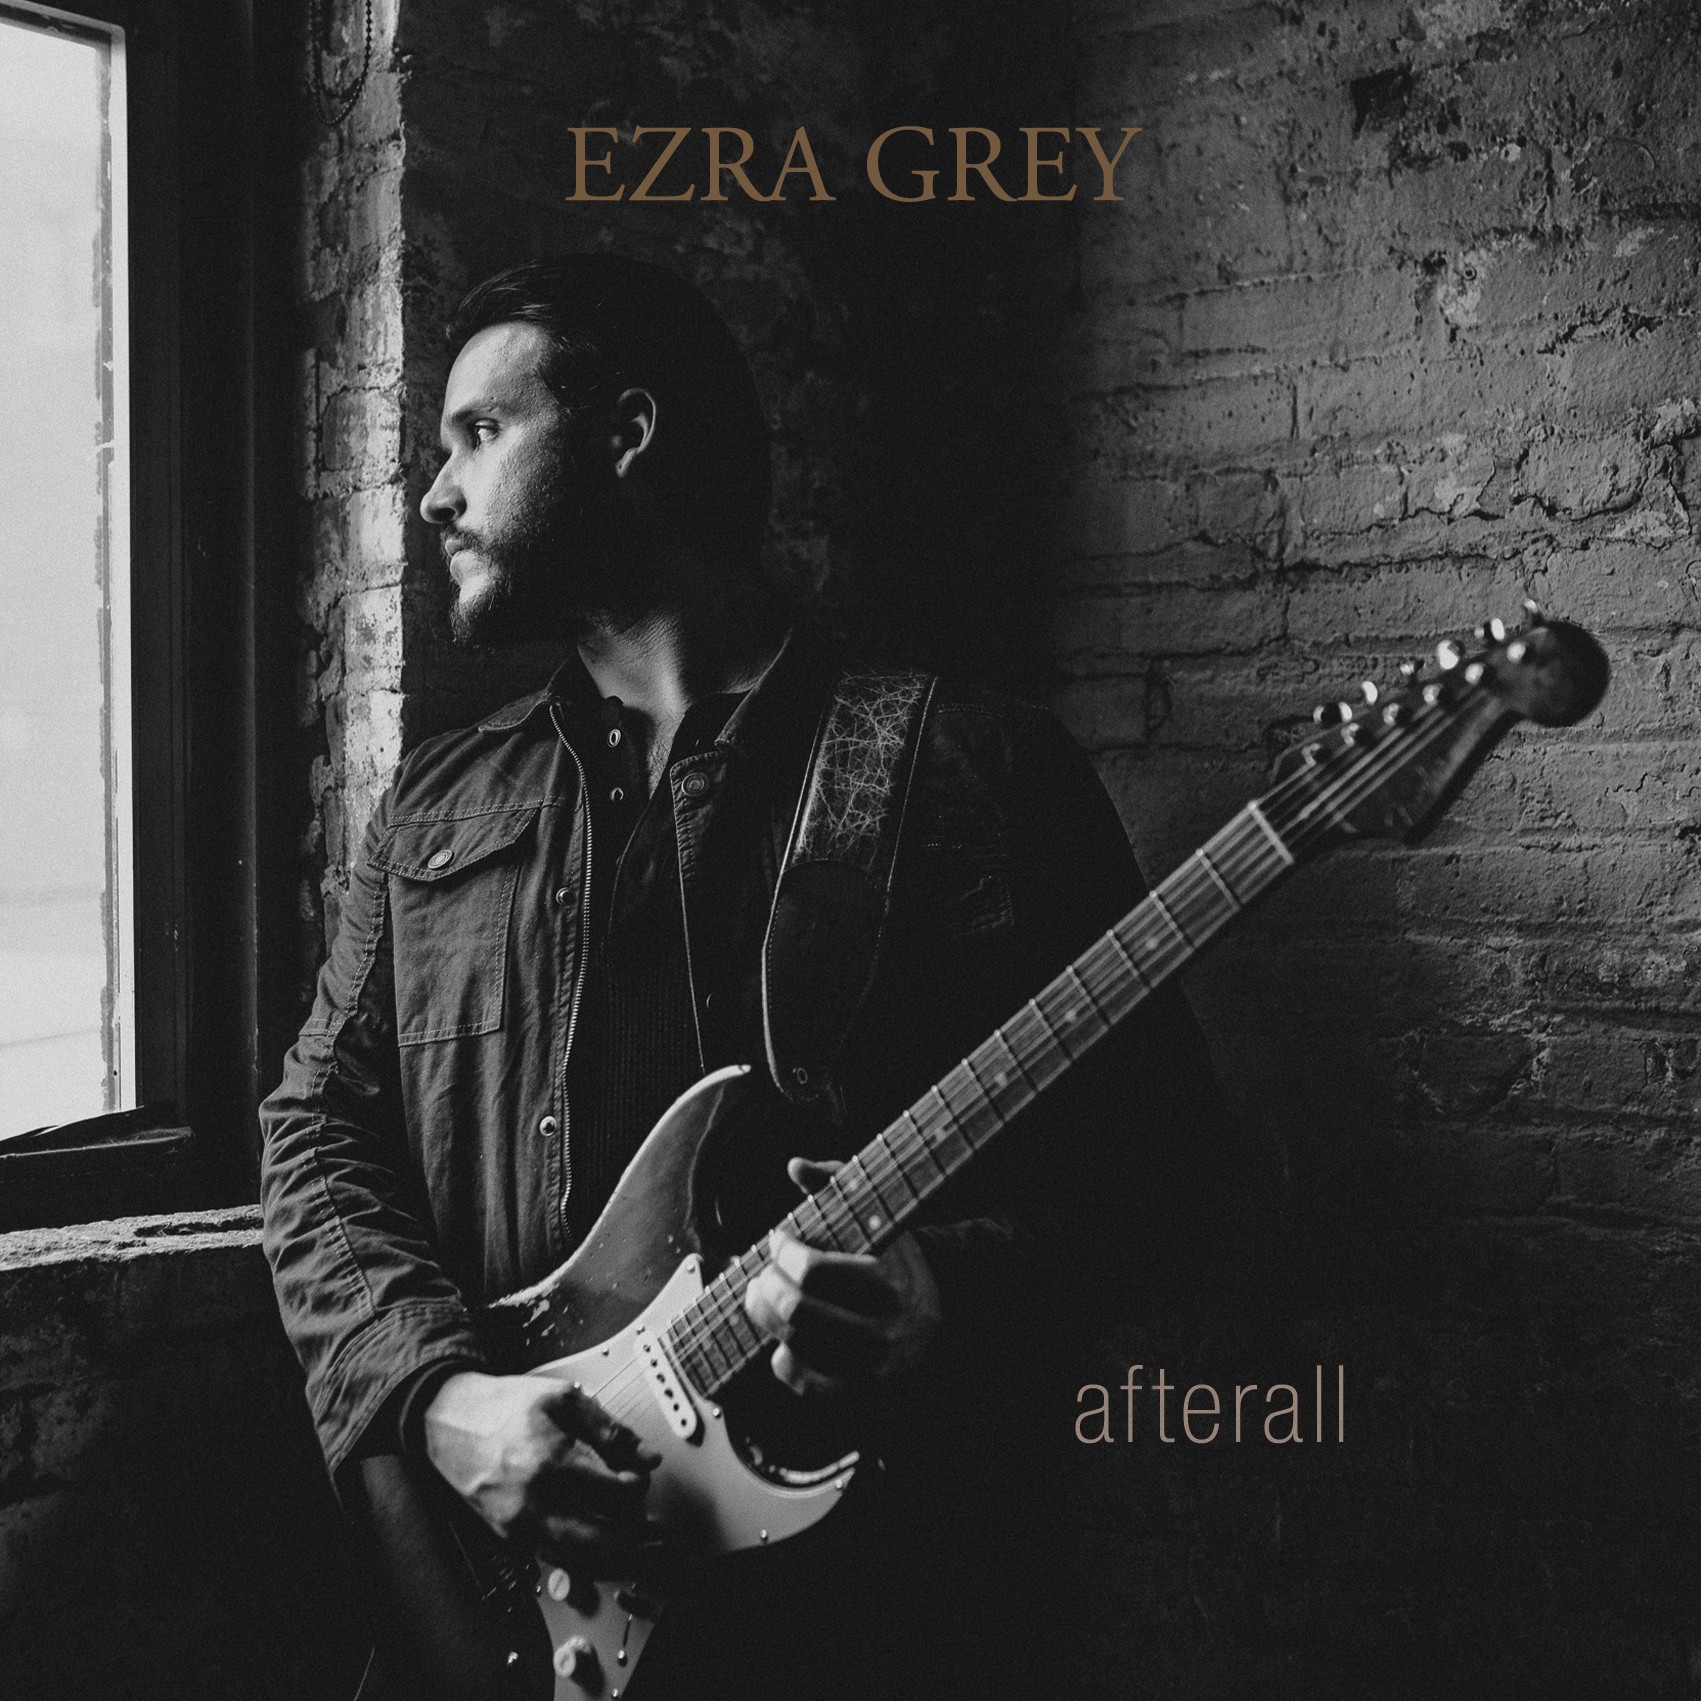 Ezra Grey ‘Afterall’ album artwork